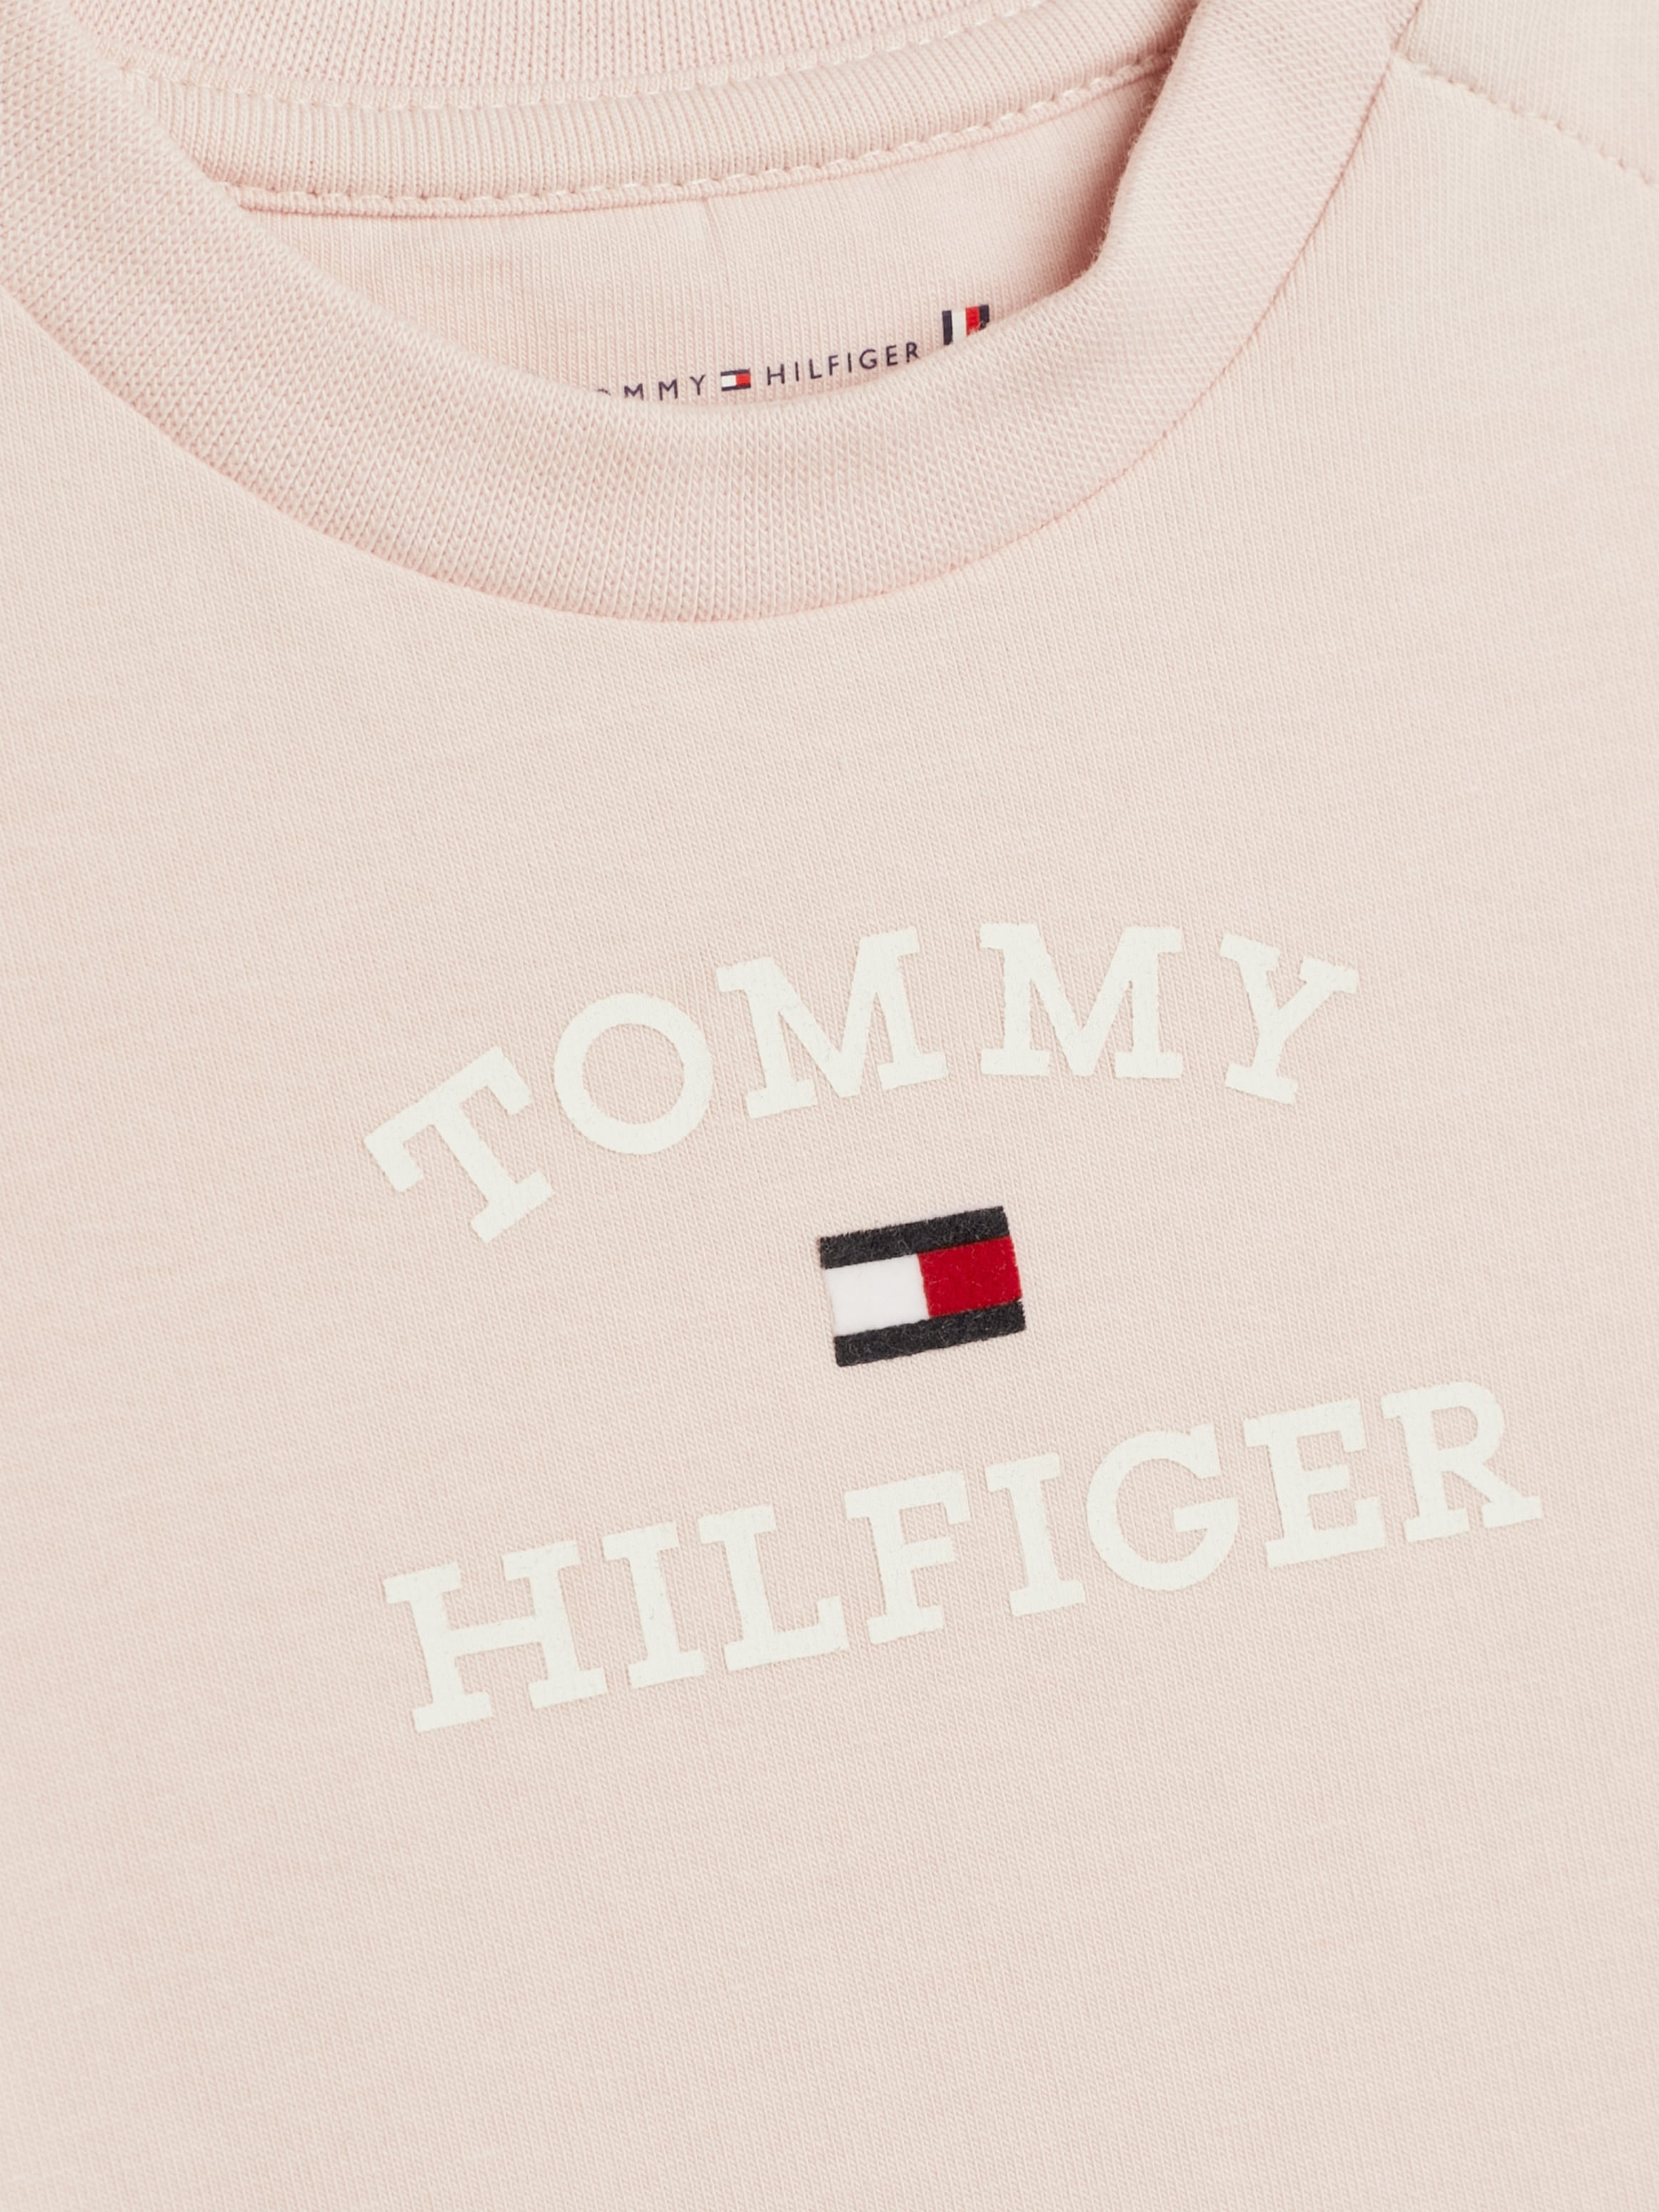 Tommy Hilfiger T-Shirt »BABY TH LOGO TEE S/S«, Baby bis 2 Jahre